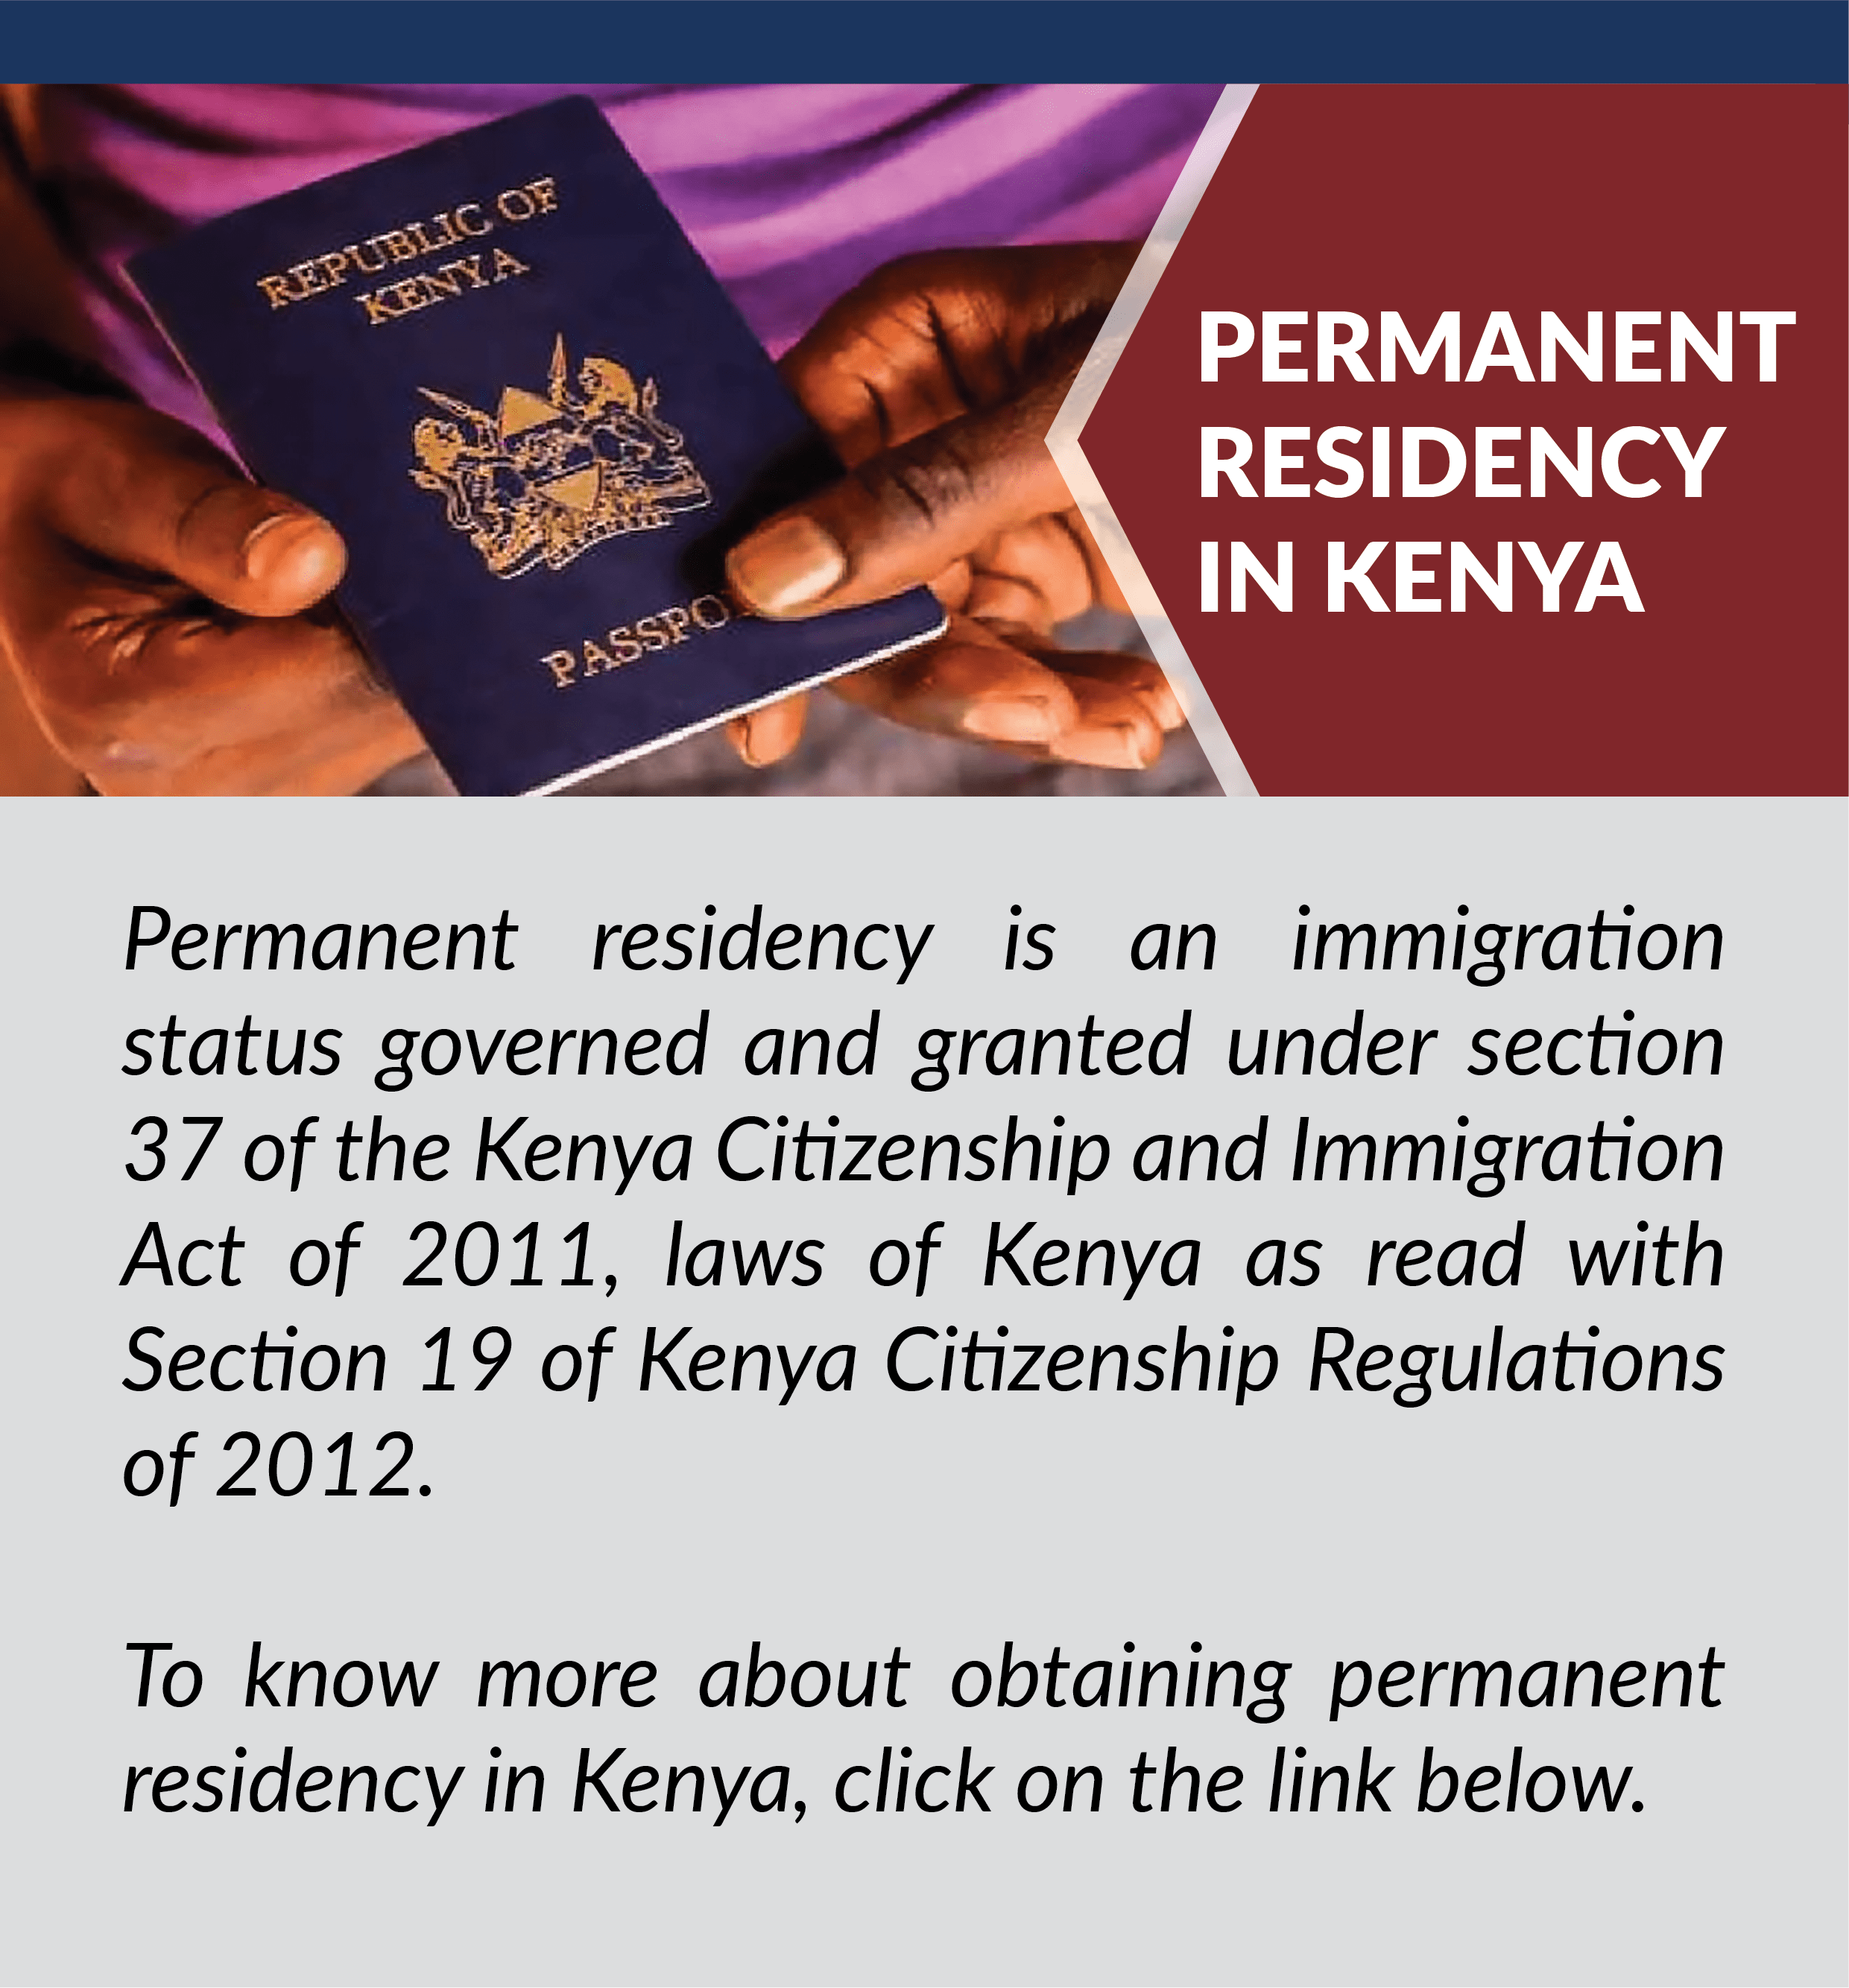 Obtaining Permanent Residency in Kenya